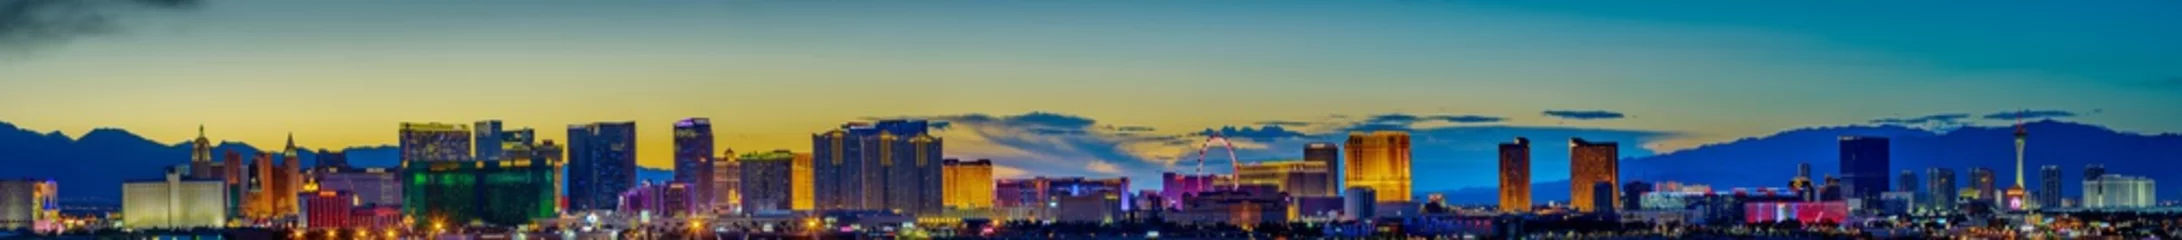 Badezimmer Foto Rückwand Skyline-Blick bei Sonnenuntergang des berühmten Las Vegas Strip in Weltklasse-Hotels und Casinos, NV © yooranpark